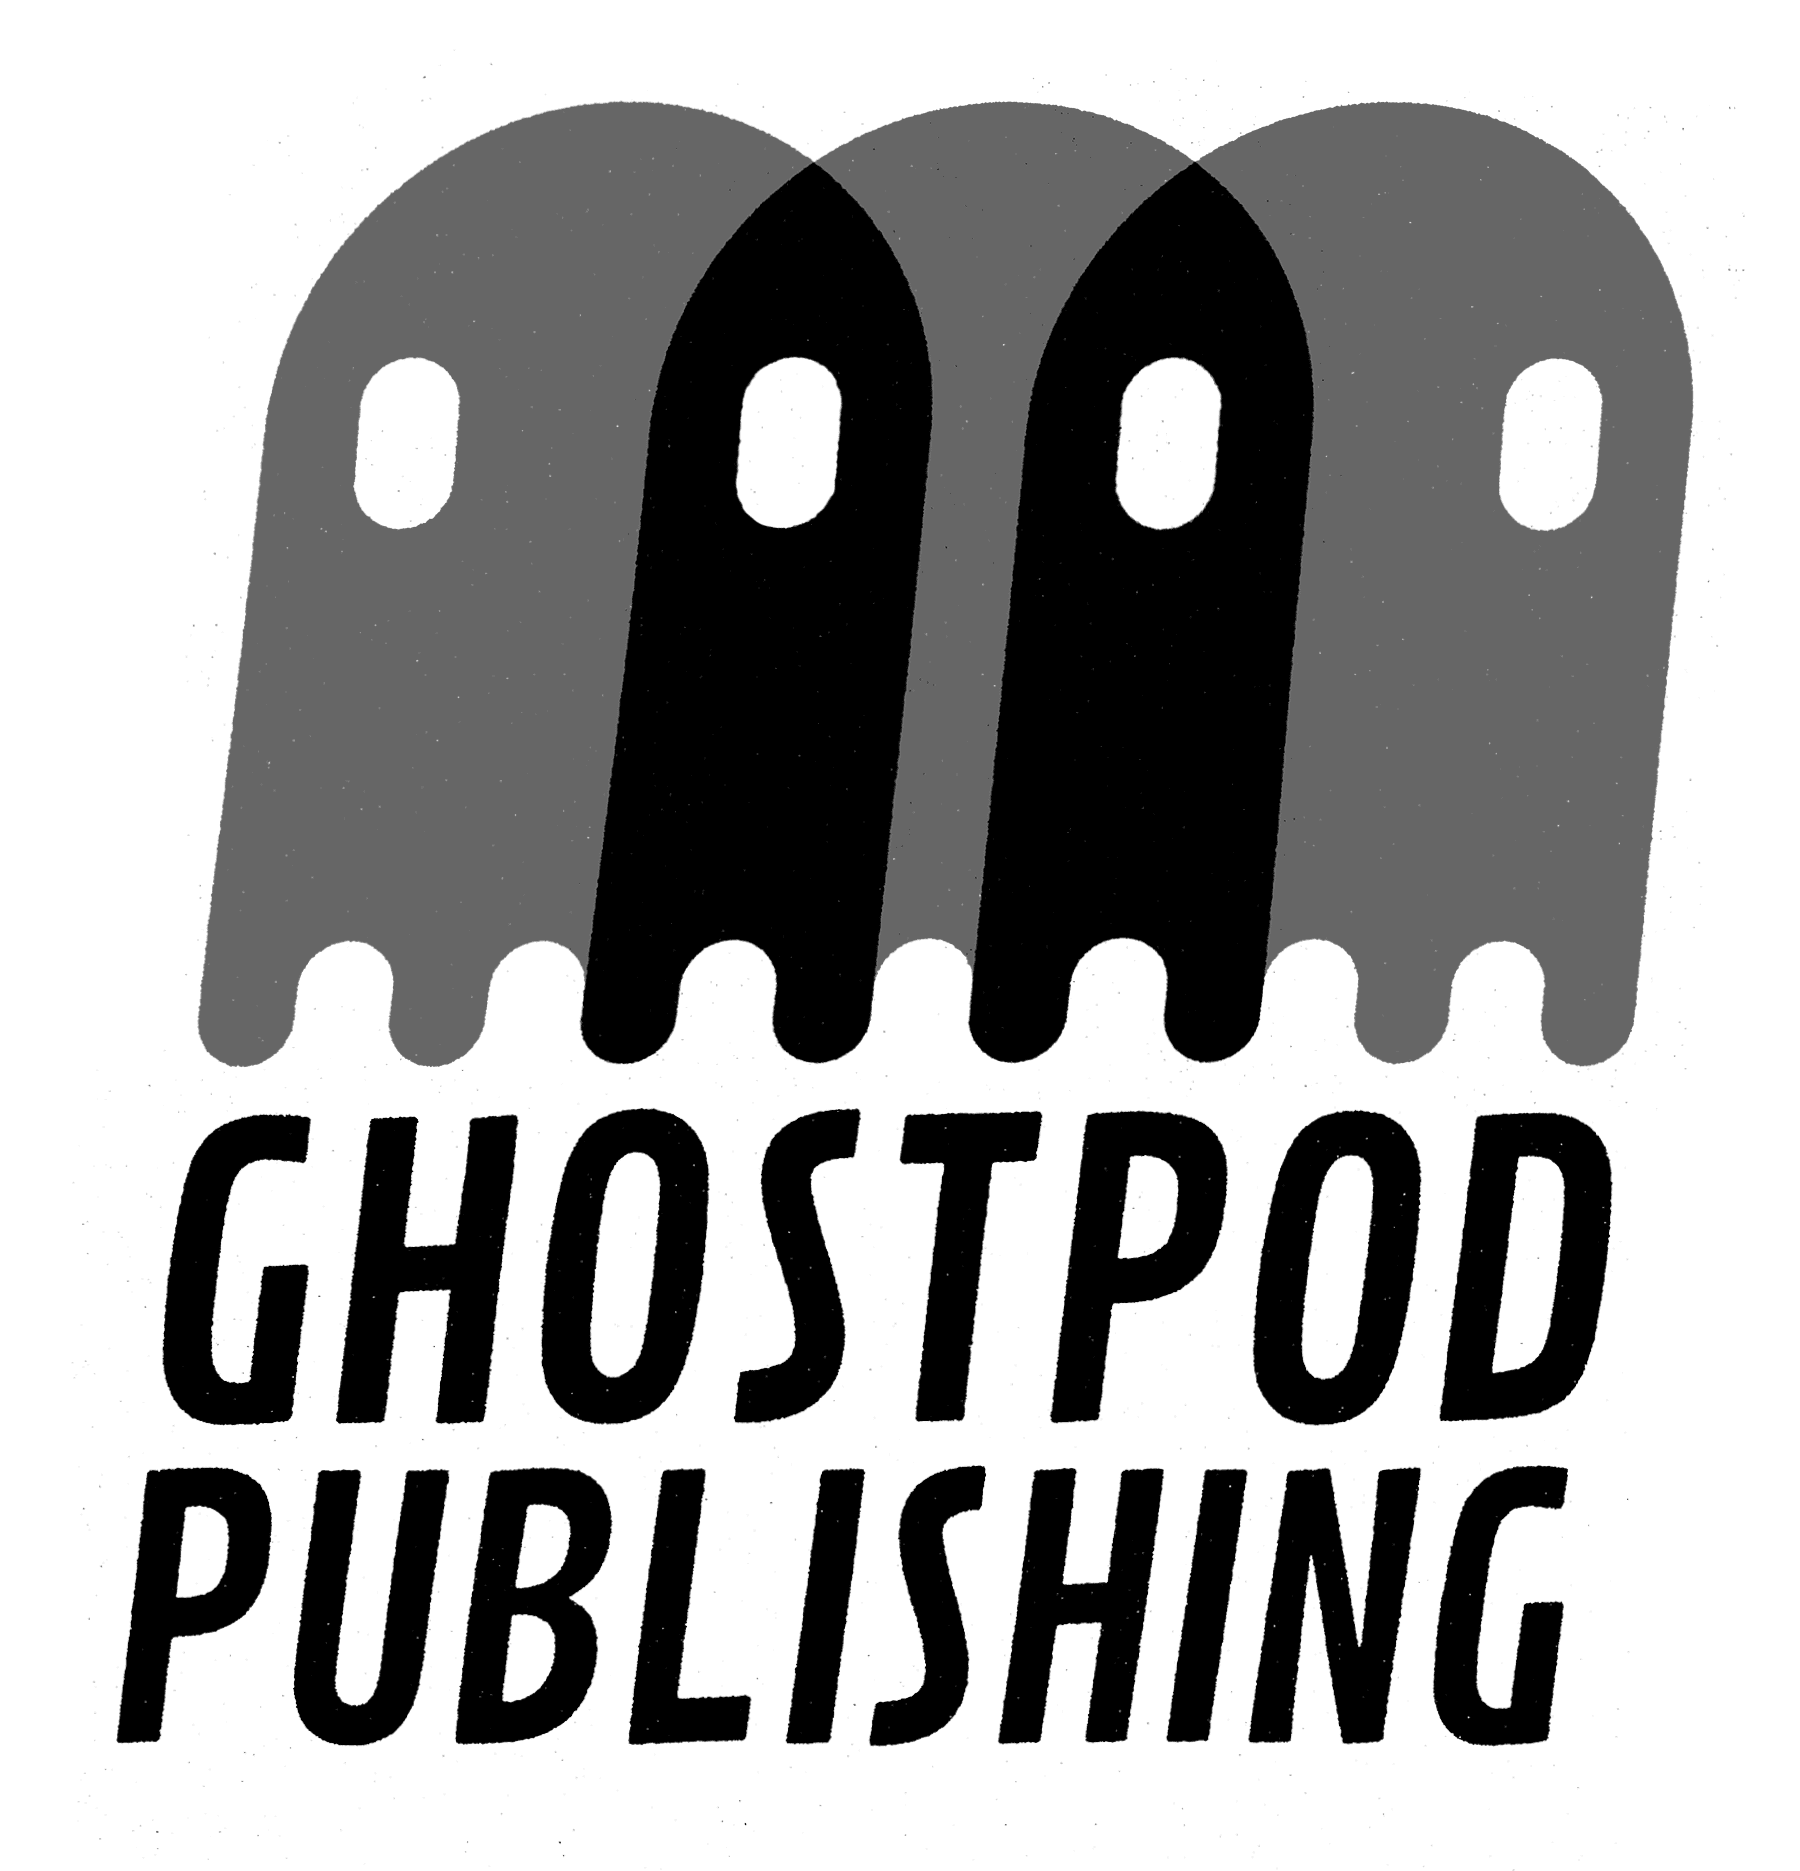 Ghostpod Publishing